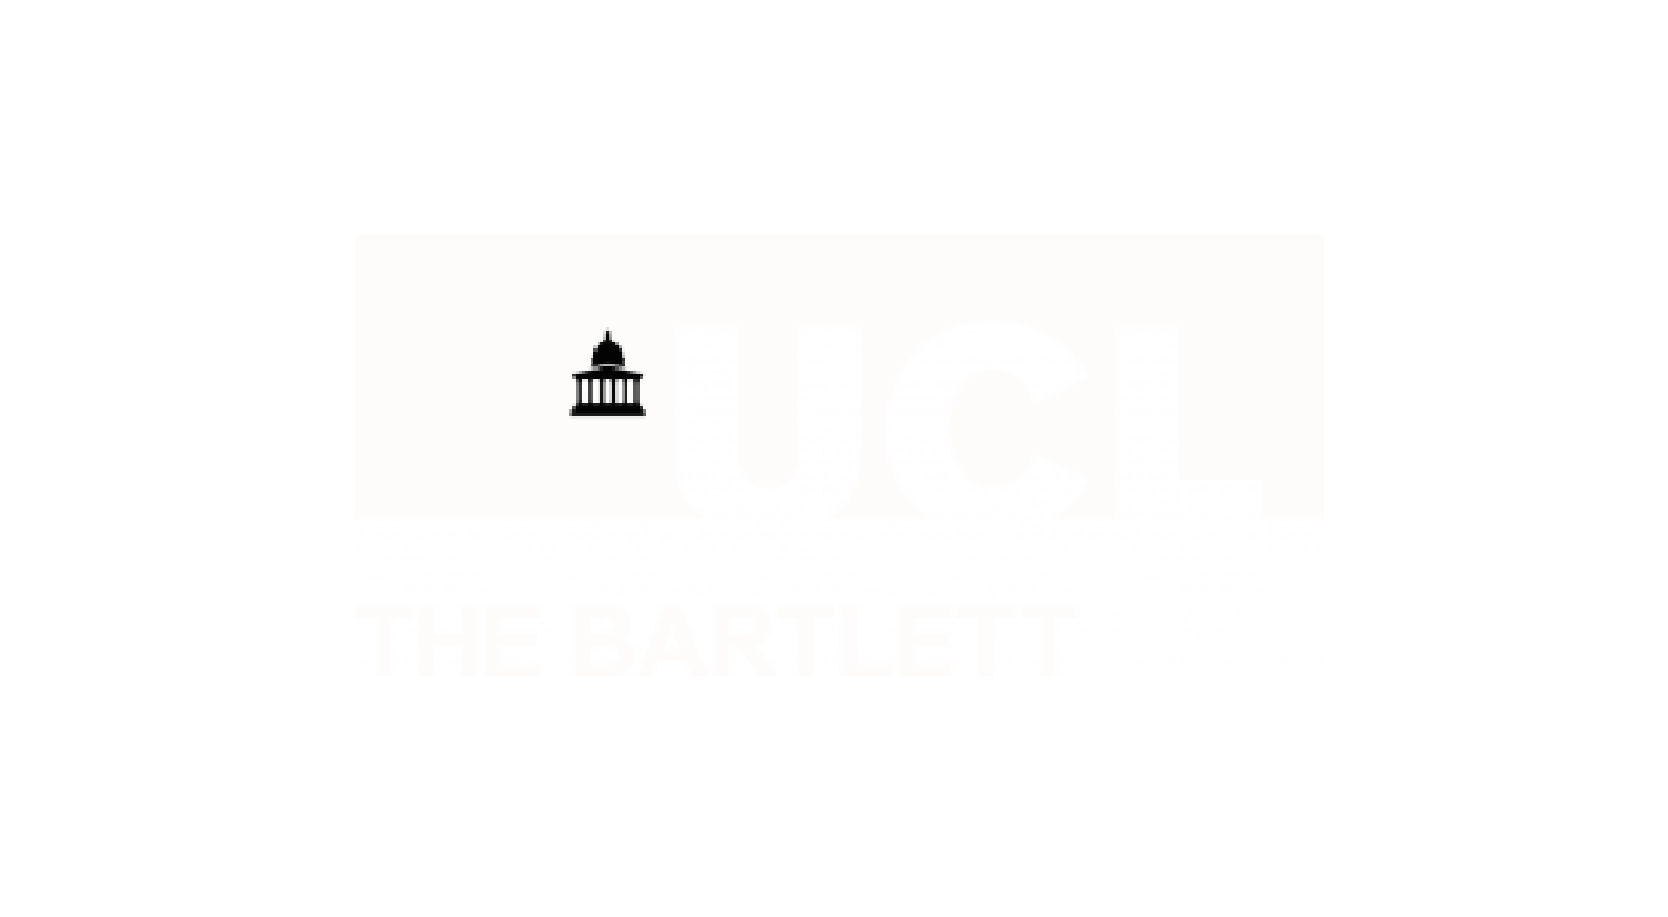 UCL - The Bartlett